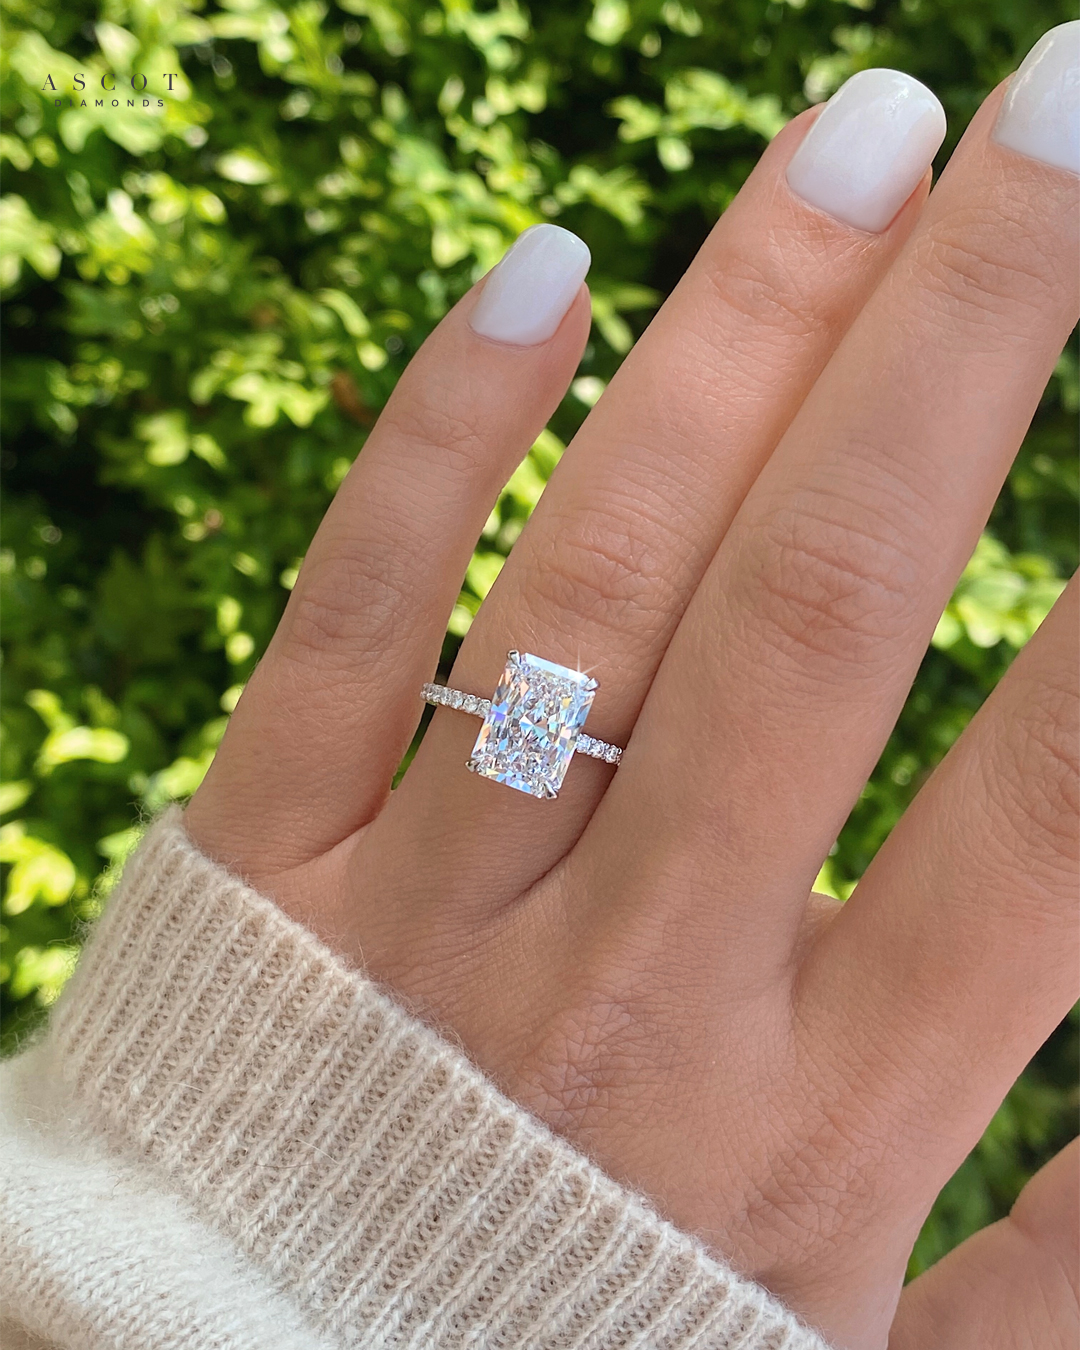 10k engagement ring by ascot diamonds